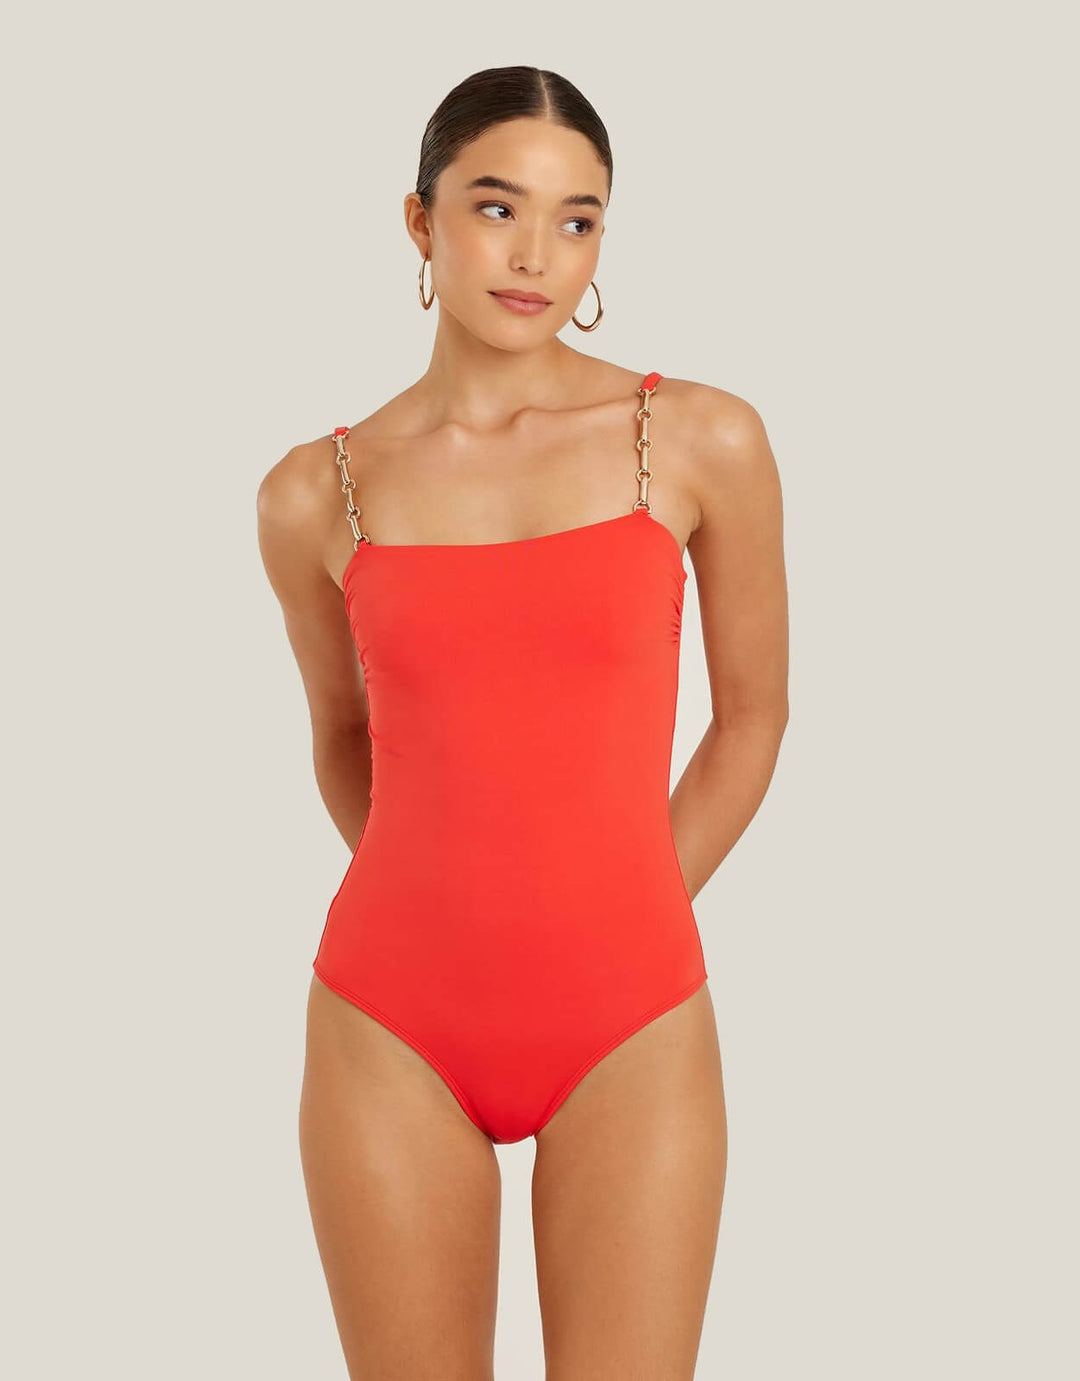 Lenny Niemeyer Gold Chain Strap One Piece Swimsuit Watermelon Red